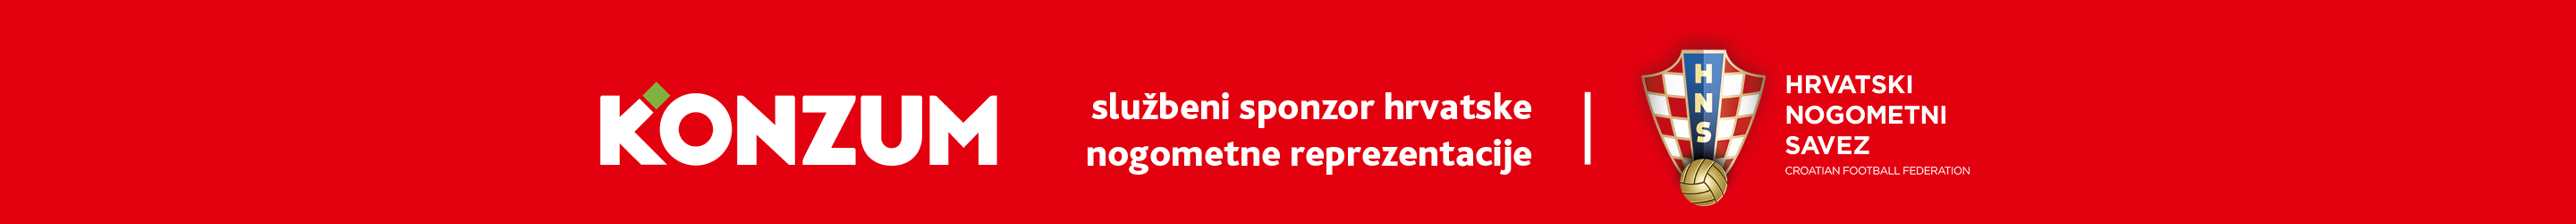 službeni sponzor hrvatske nogometne reprezentacije